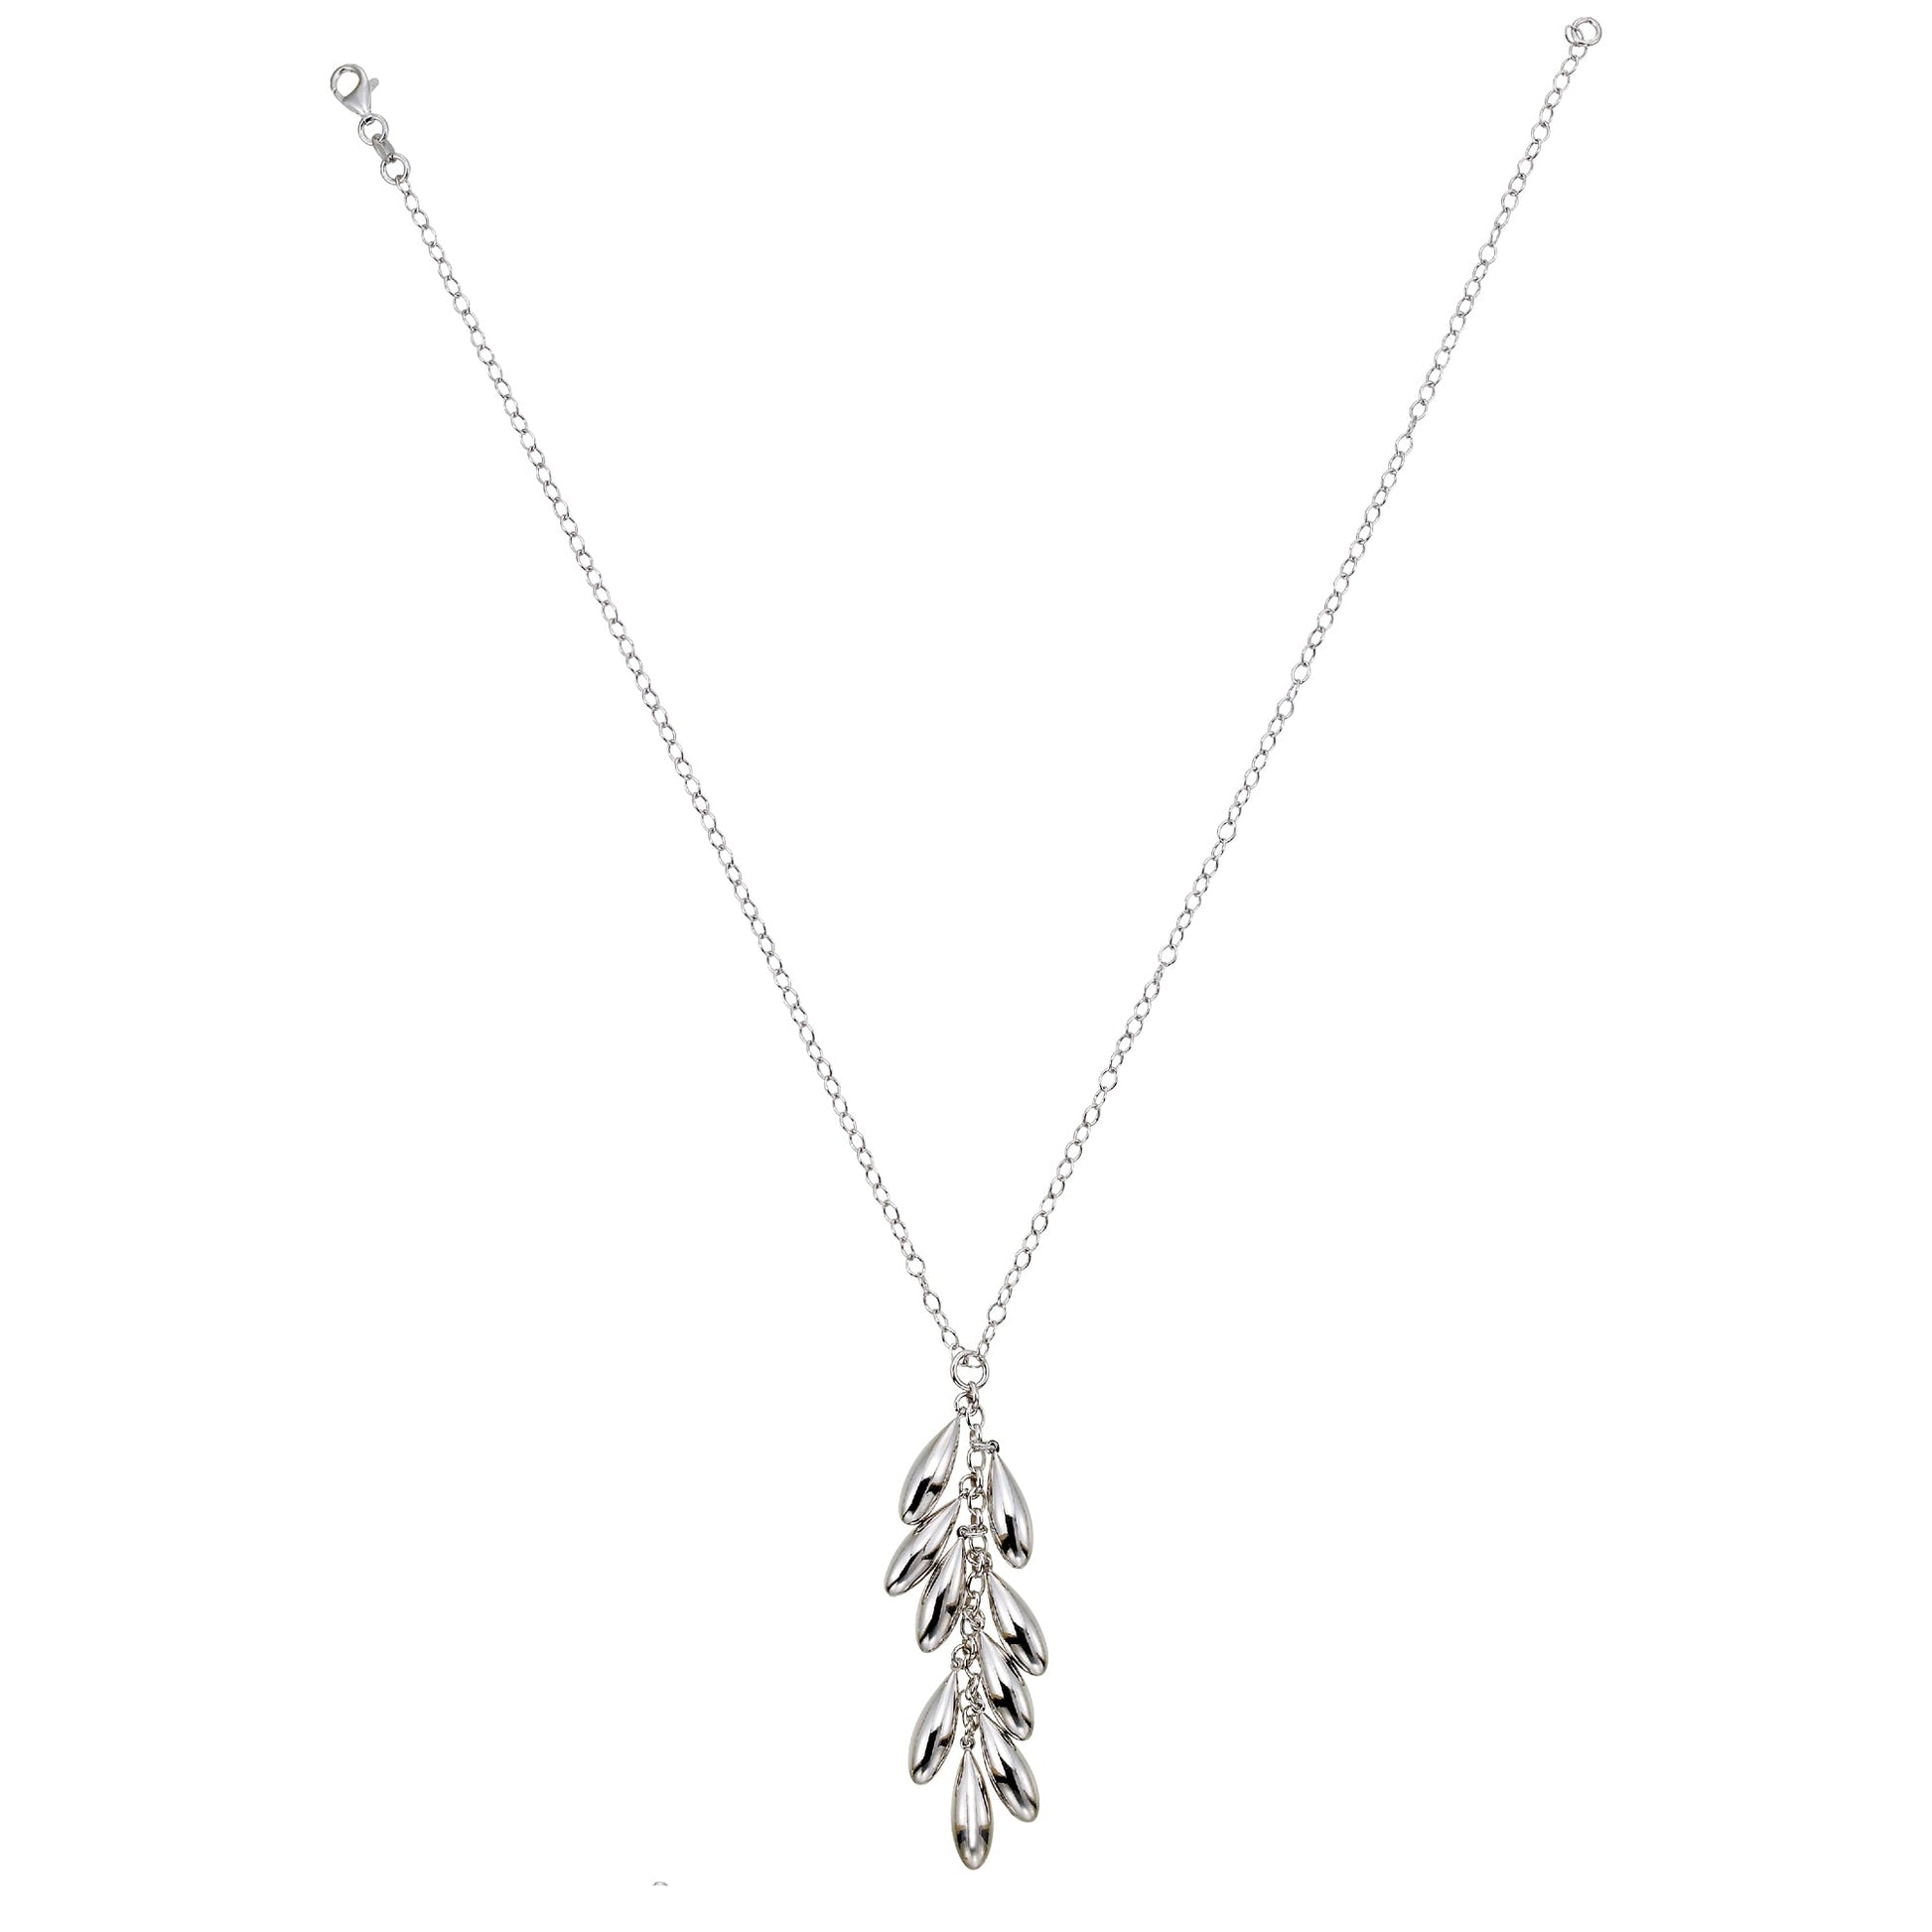 Franco Stellari Italian Sterling Silver Teardrop Cluster Necklace 18"